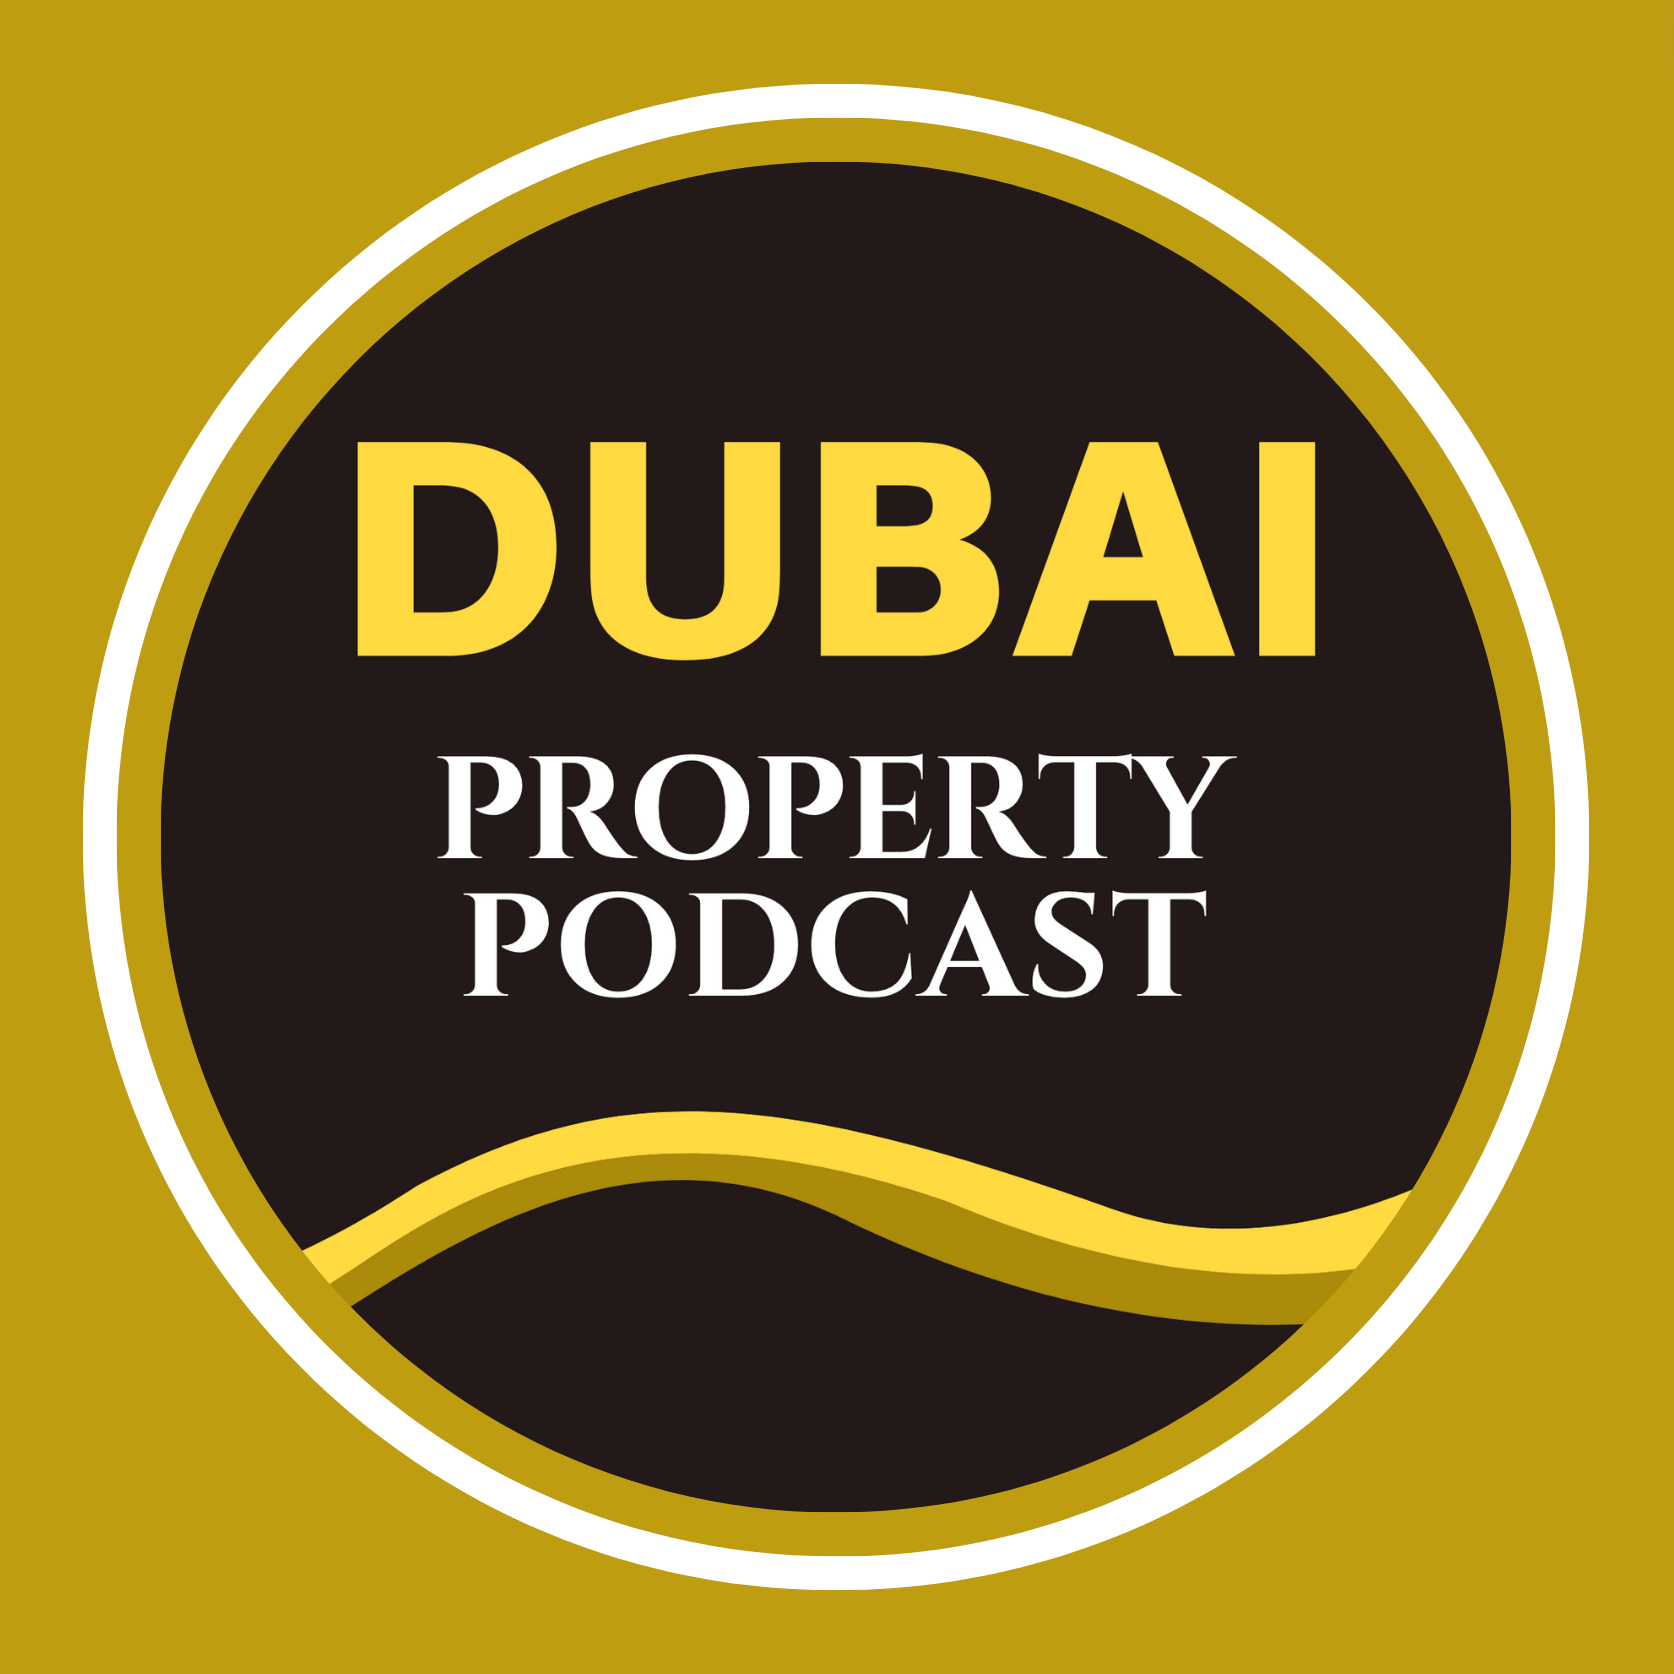 ”Dubai Property: British Investors Dominating”